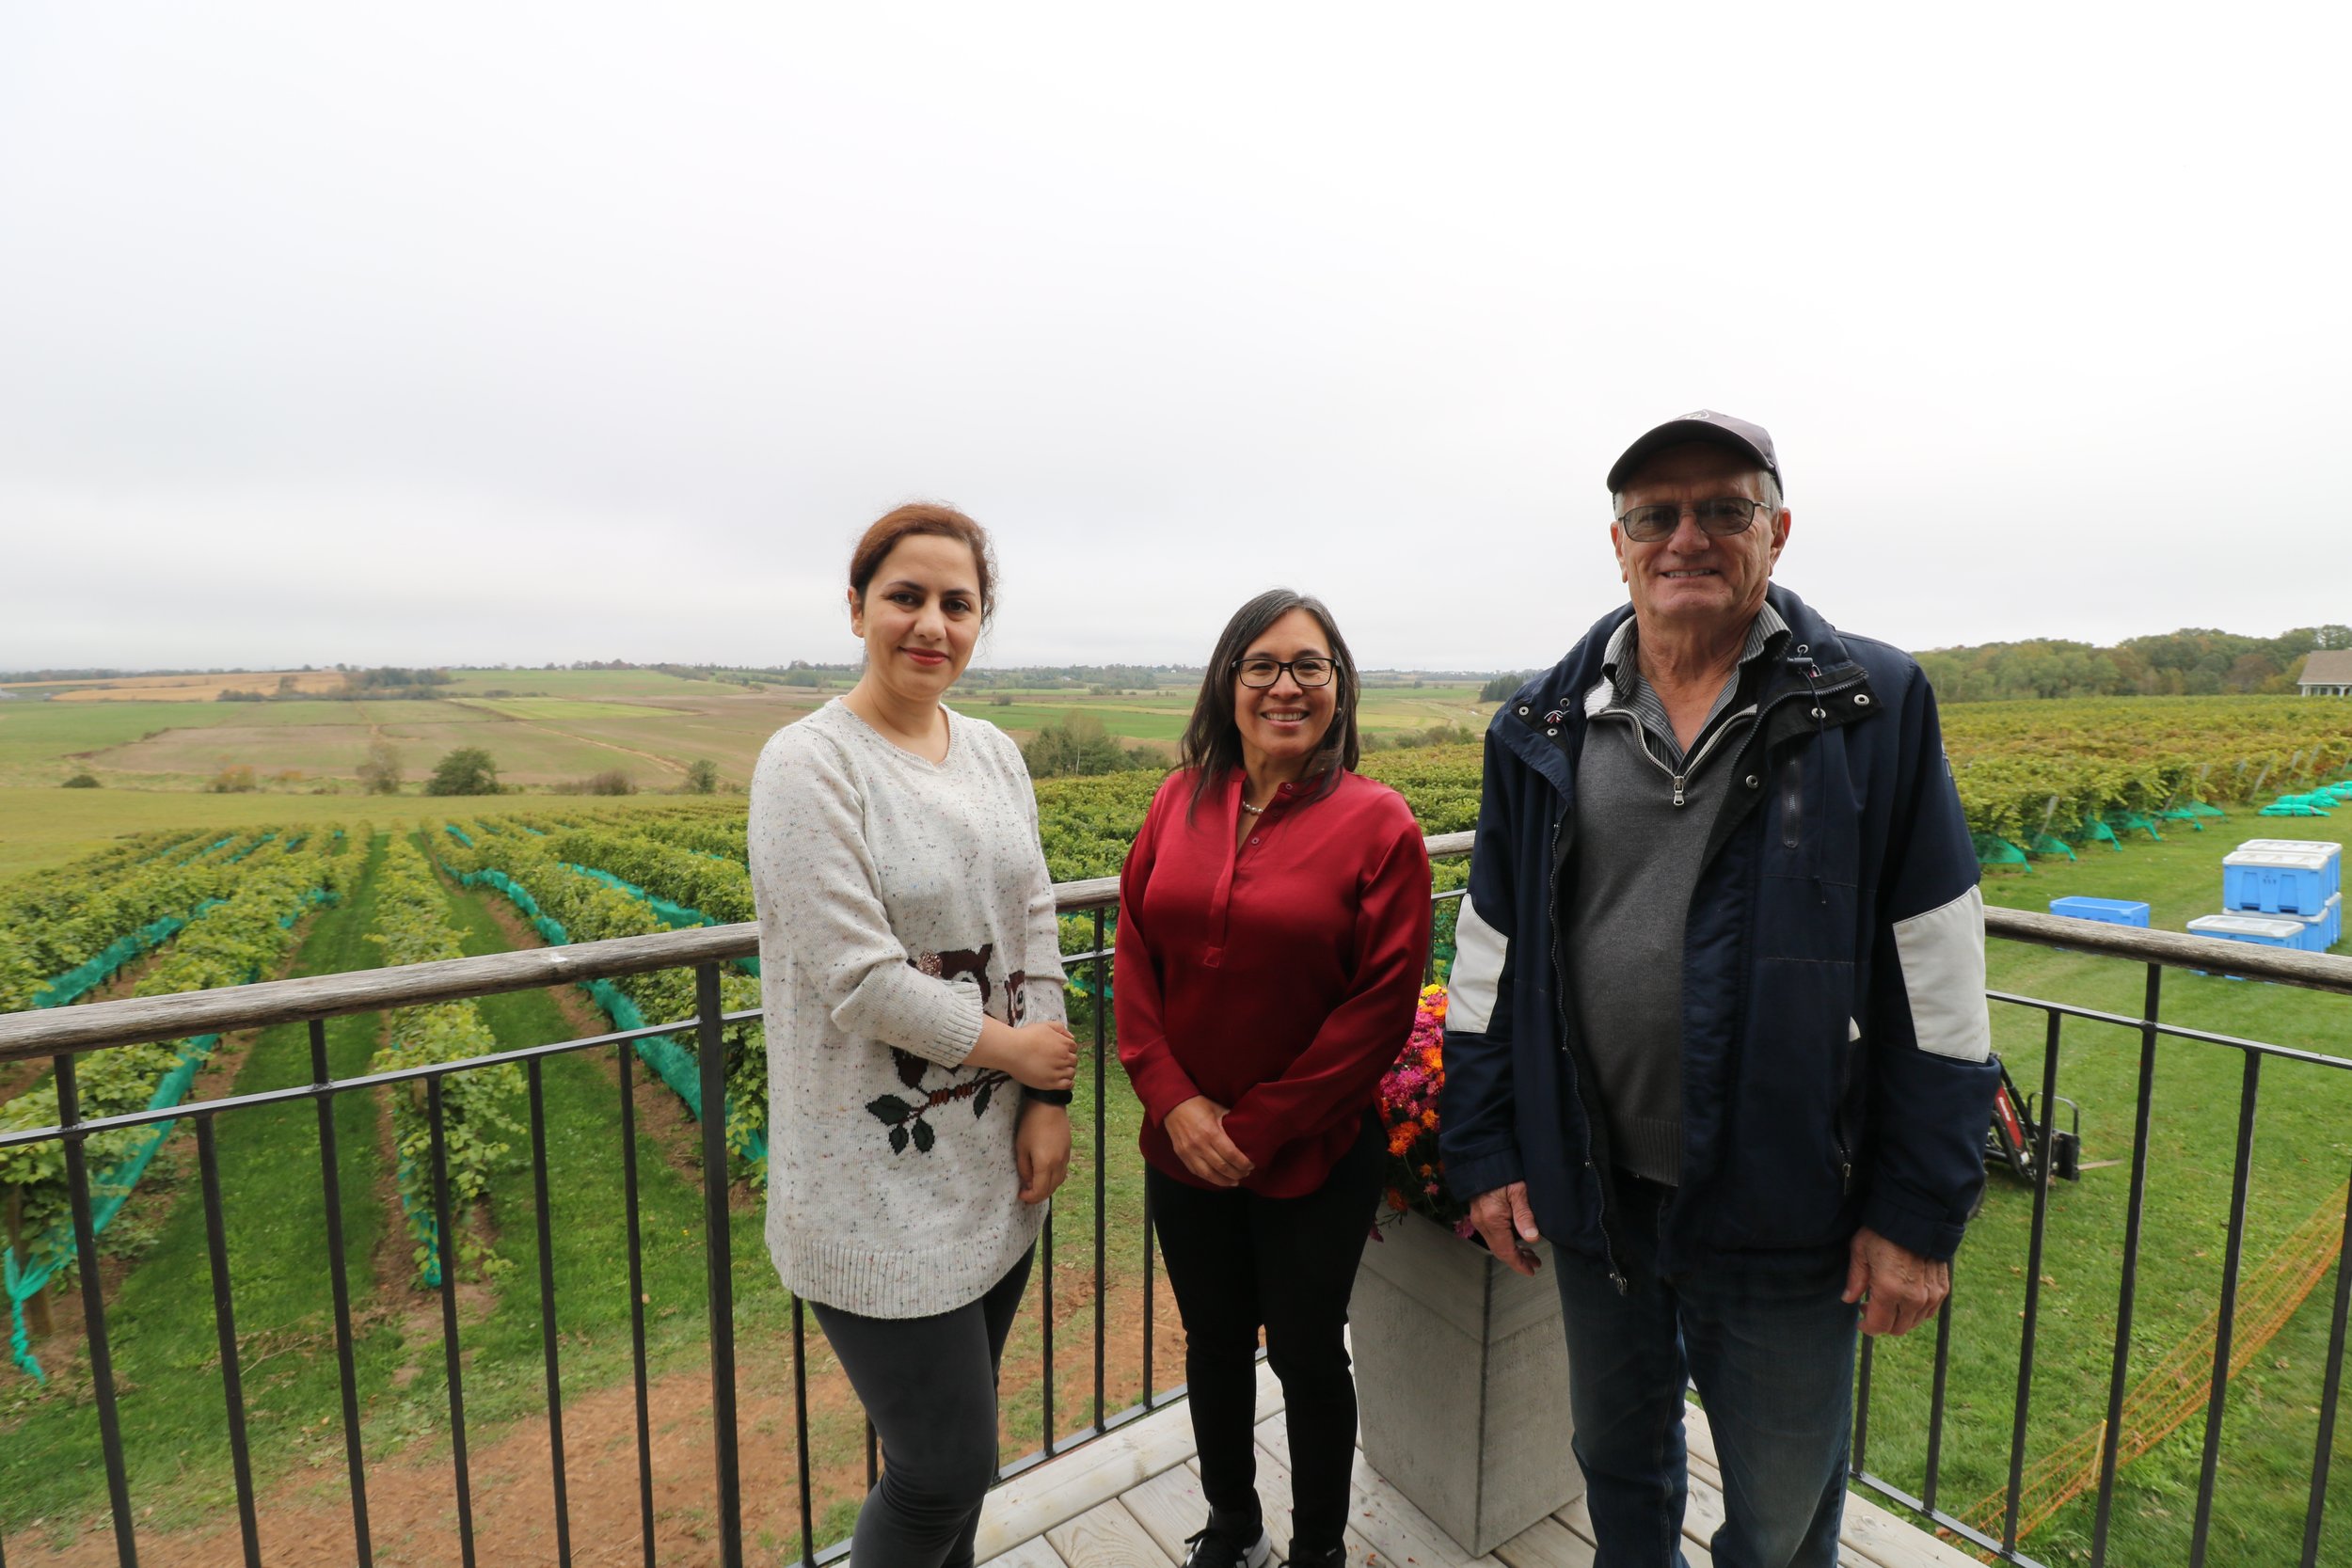  De Fuentes, Seyedjafarrangraz and Mclarty stand with Planters Ridge vineyard behind them 